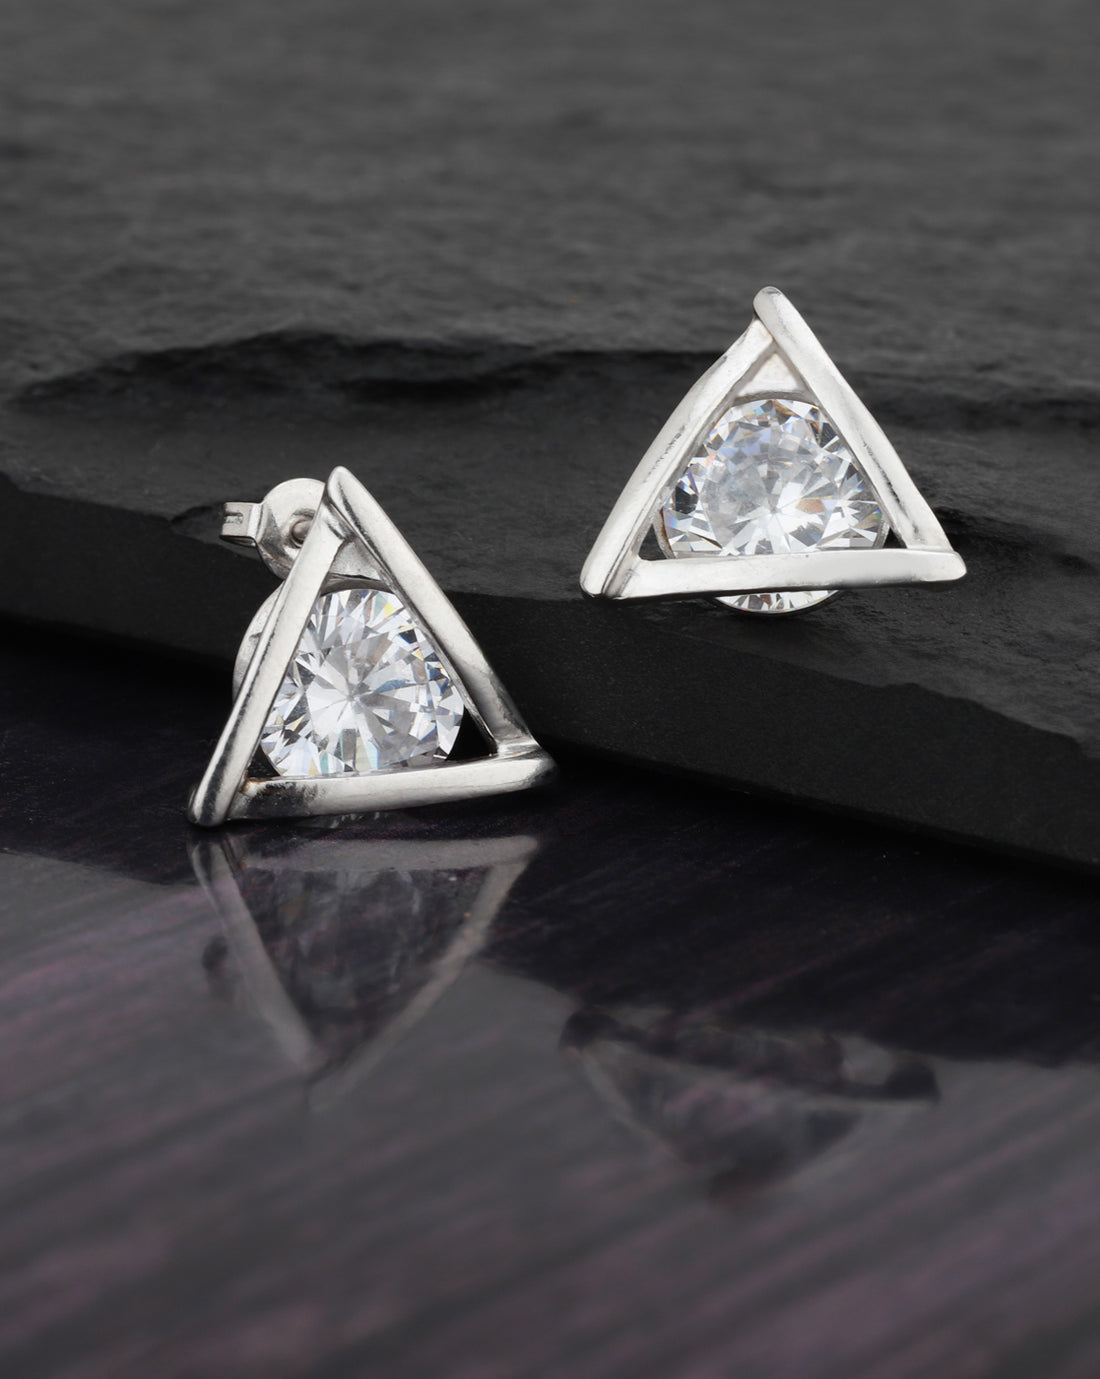 Carlton London Rhodium Plated Cz Triangular Stud Earring For Women